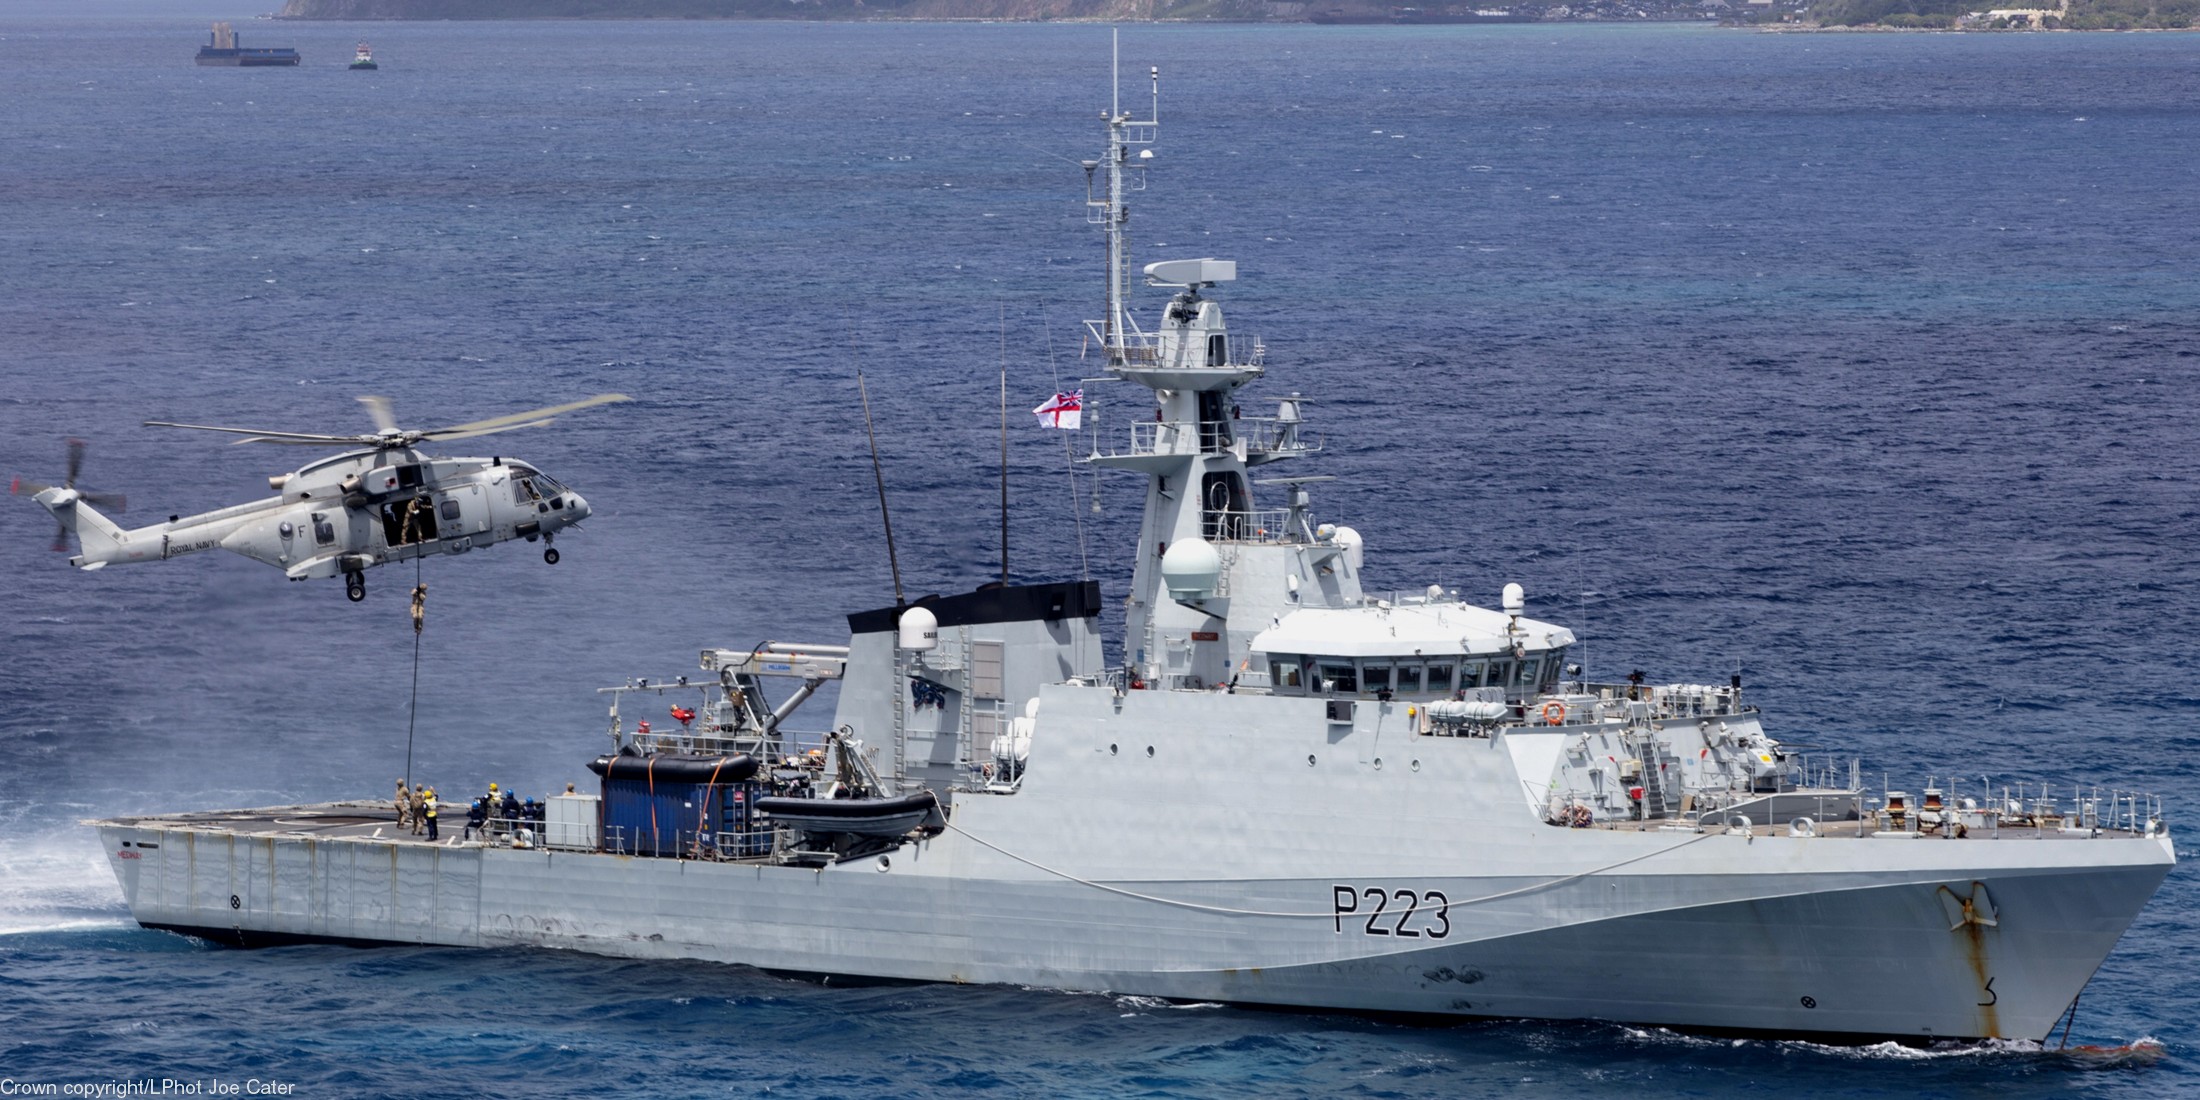 p-223 hms medway river class offshore patrol vessel opv royal navy bae systems govan scotstoun 09x